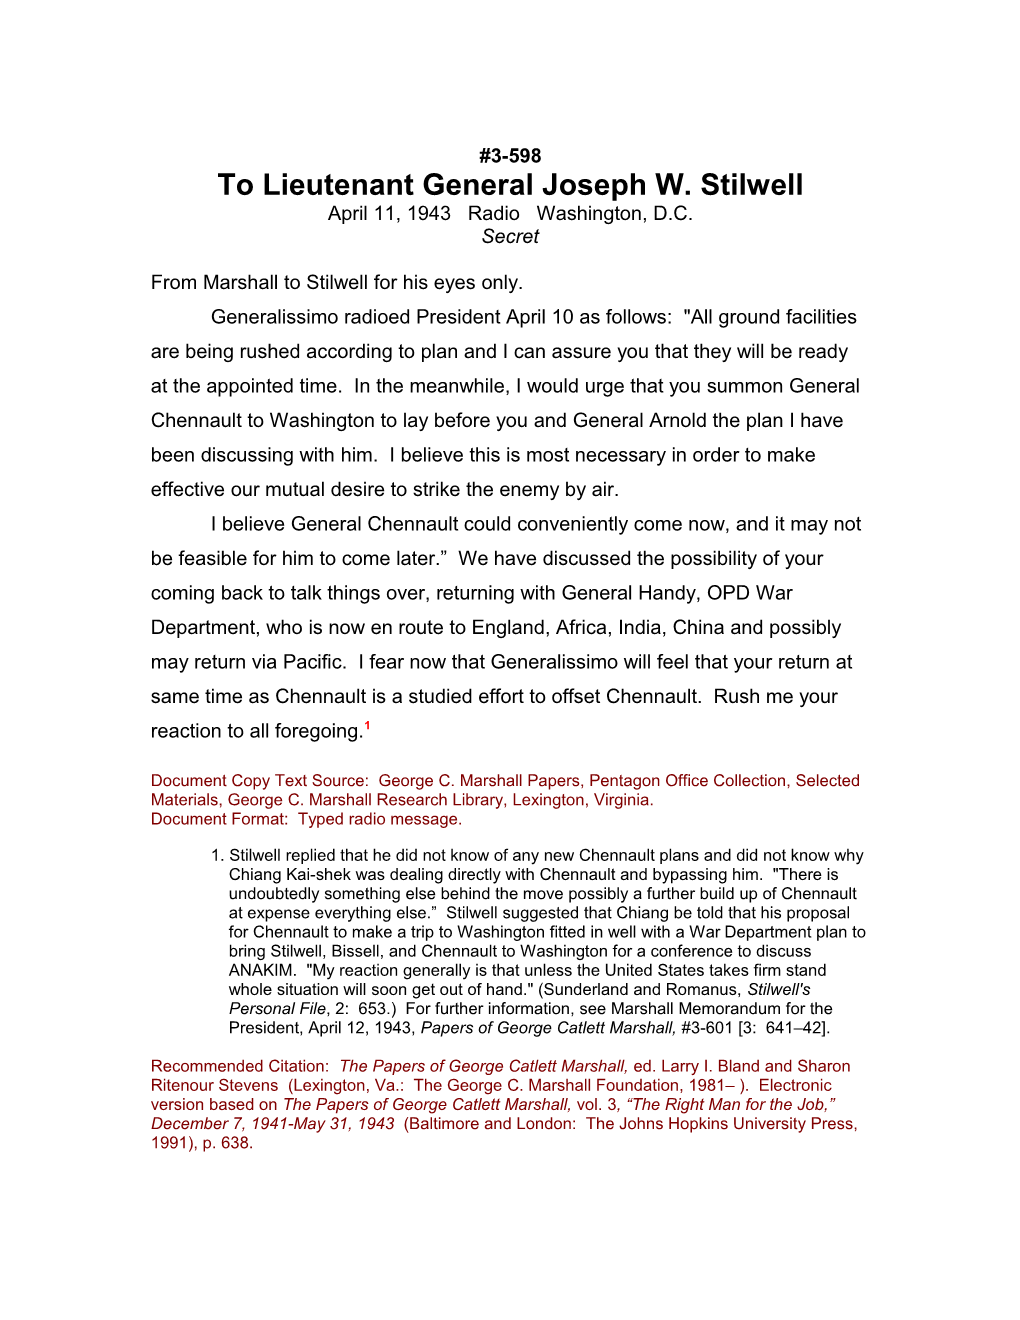 To Lieutenant General Joseph W. Stilwell